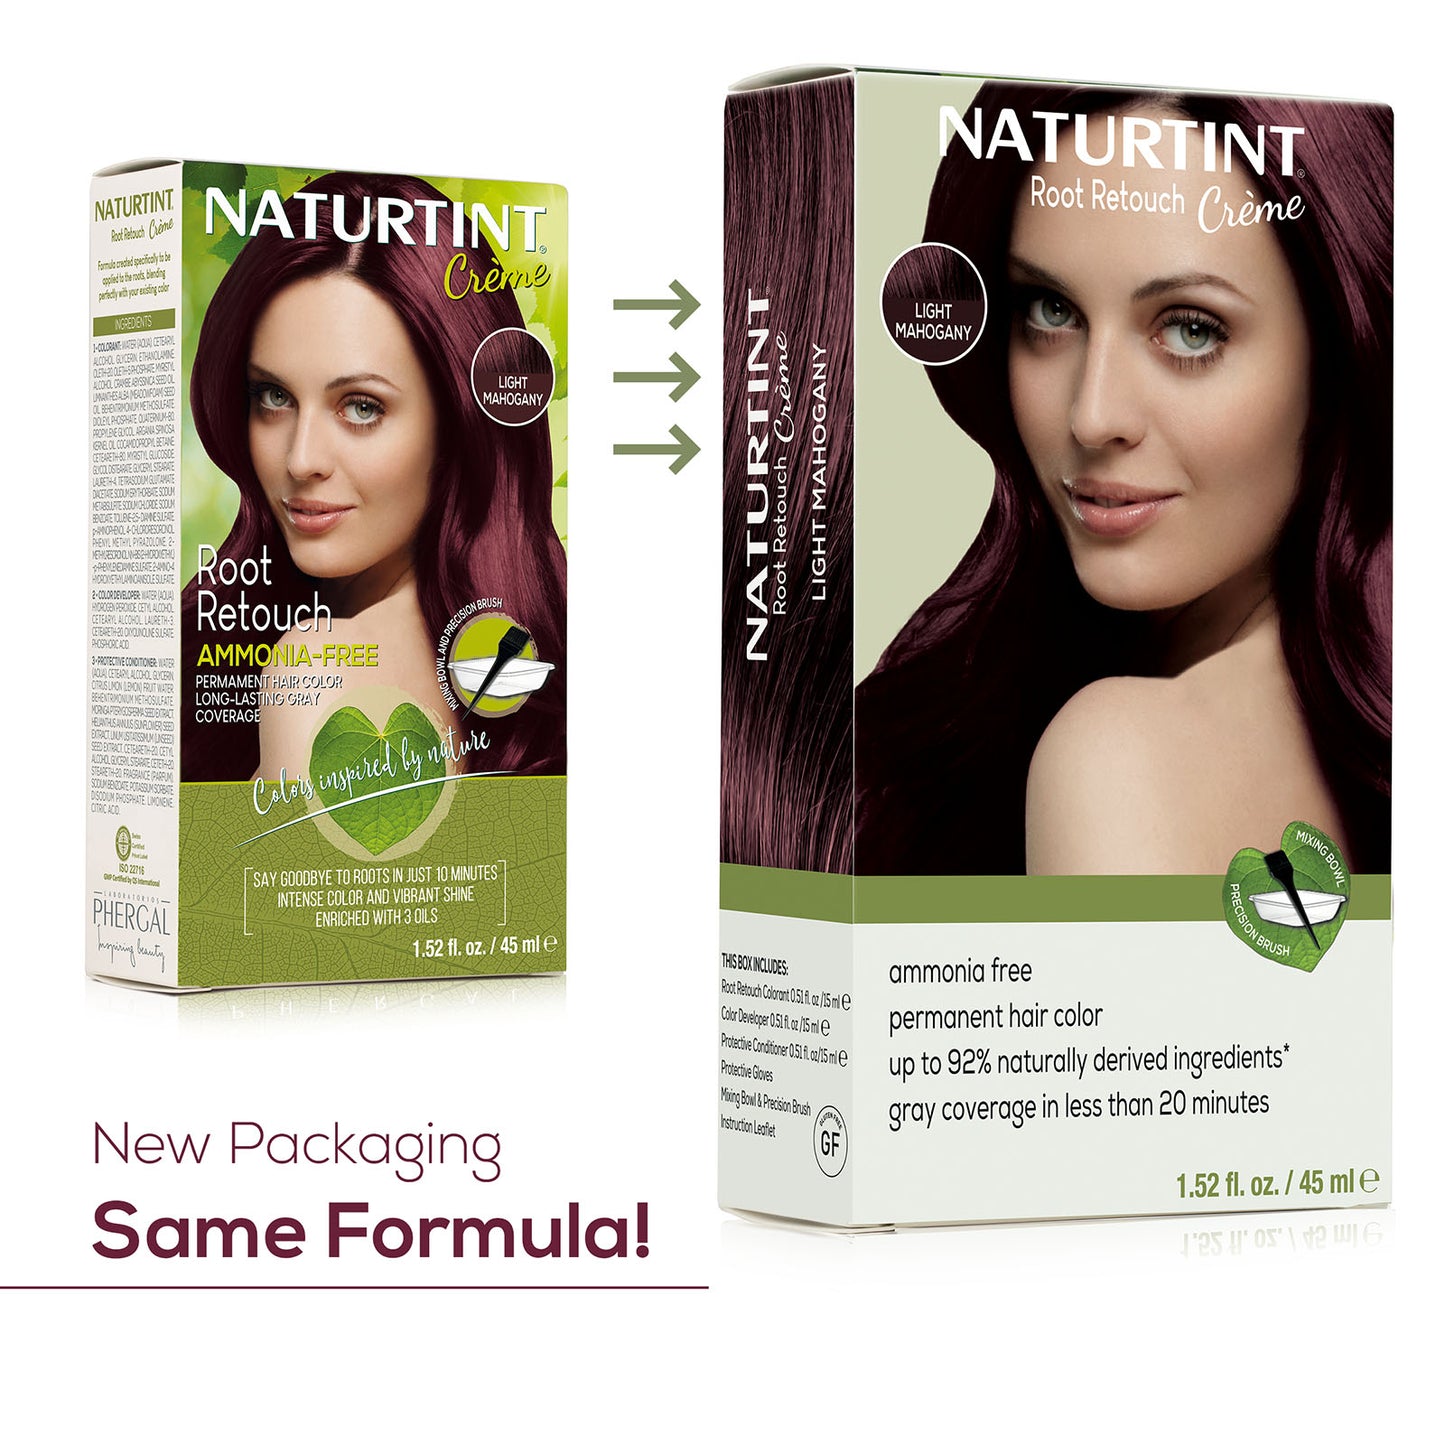 Naturtint Root Retouch Crème Permanent Hair Color - Light Mahogany